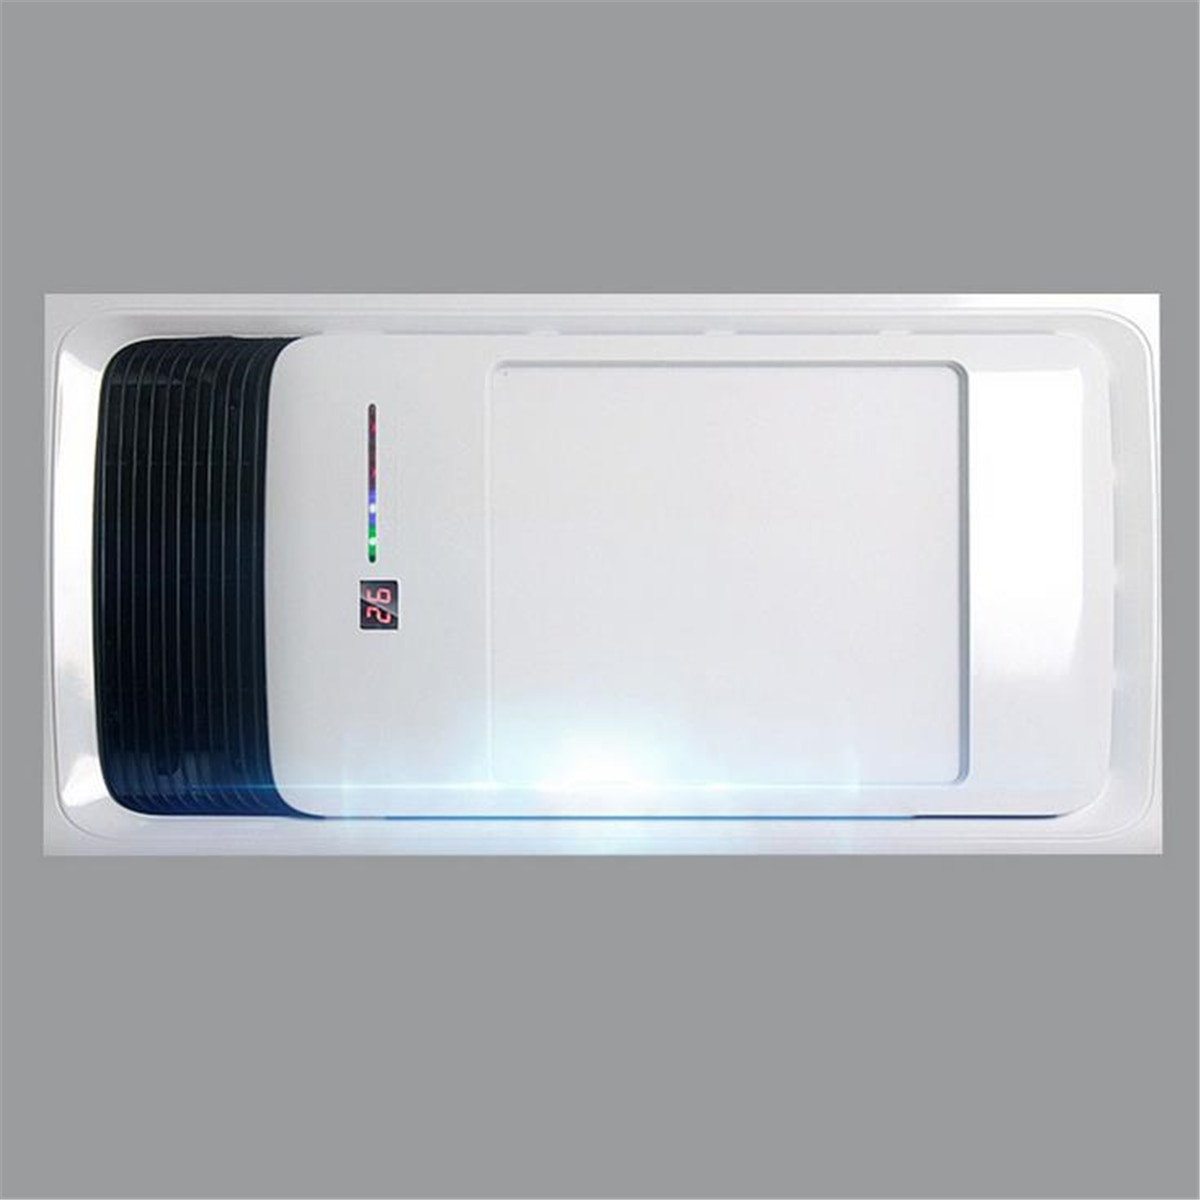 Bathroom Ceiling Heater And Light
 Wall Mounted Bathroom Electric Heater Exhaust Fan Warmer